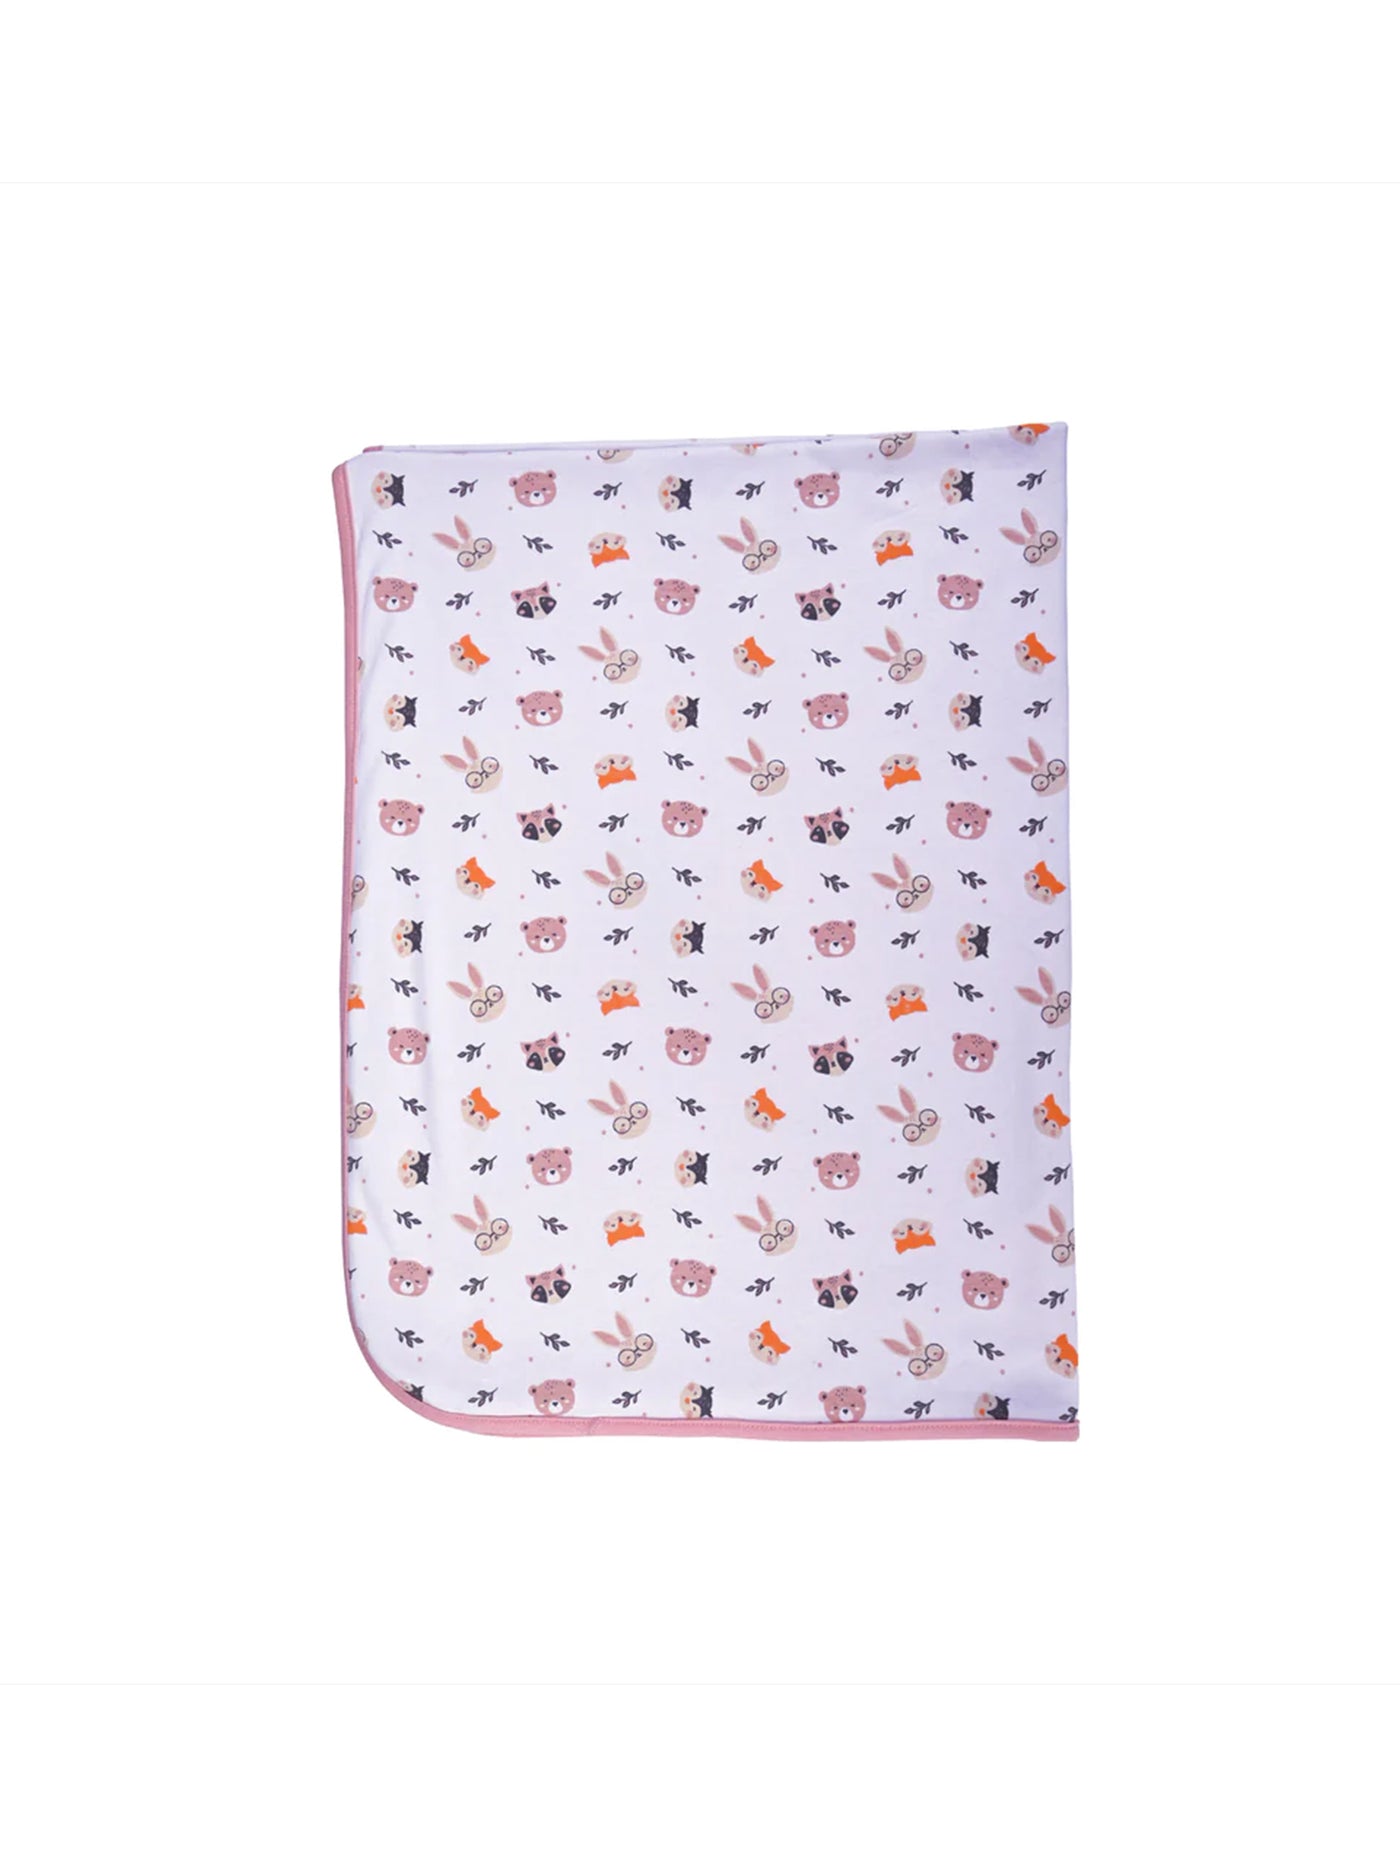 Tiny Lane Newborn Baby Blanket - Faces Design